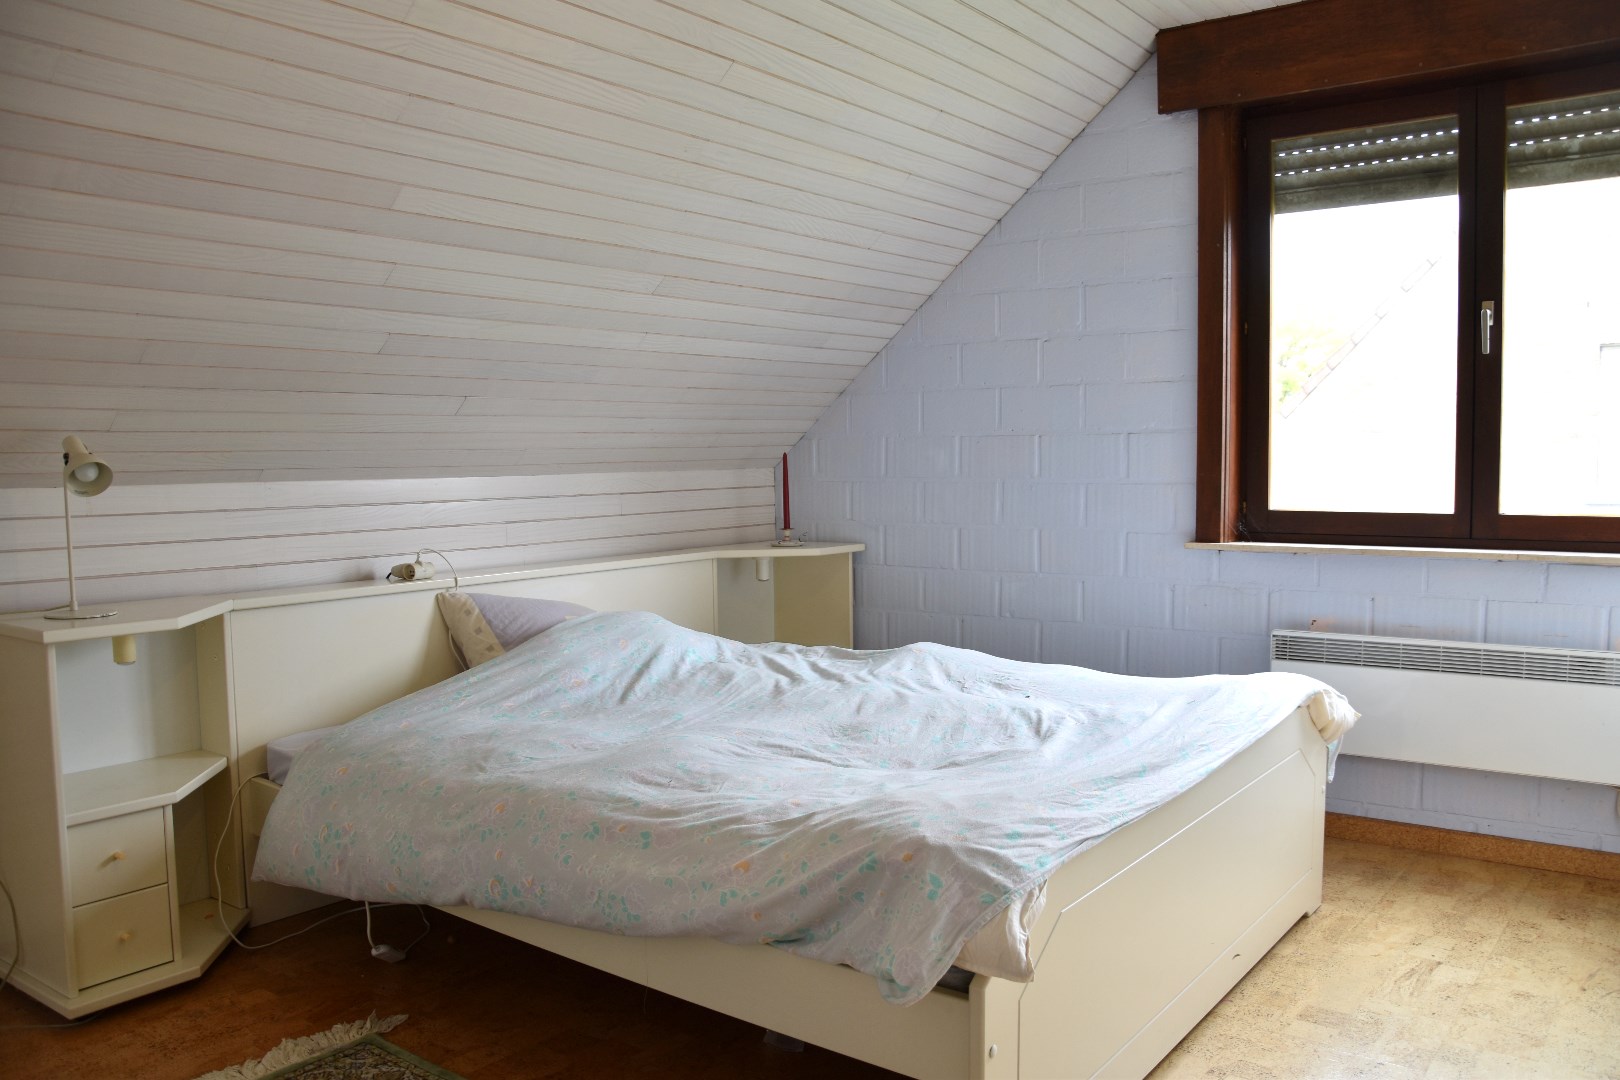 Charmante alleenstaande woning met 4 slaapkamers op Zuidgericht perceel te koop in Gullegem foto 11